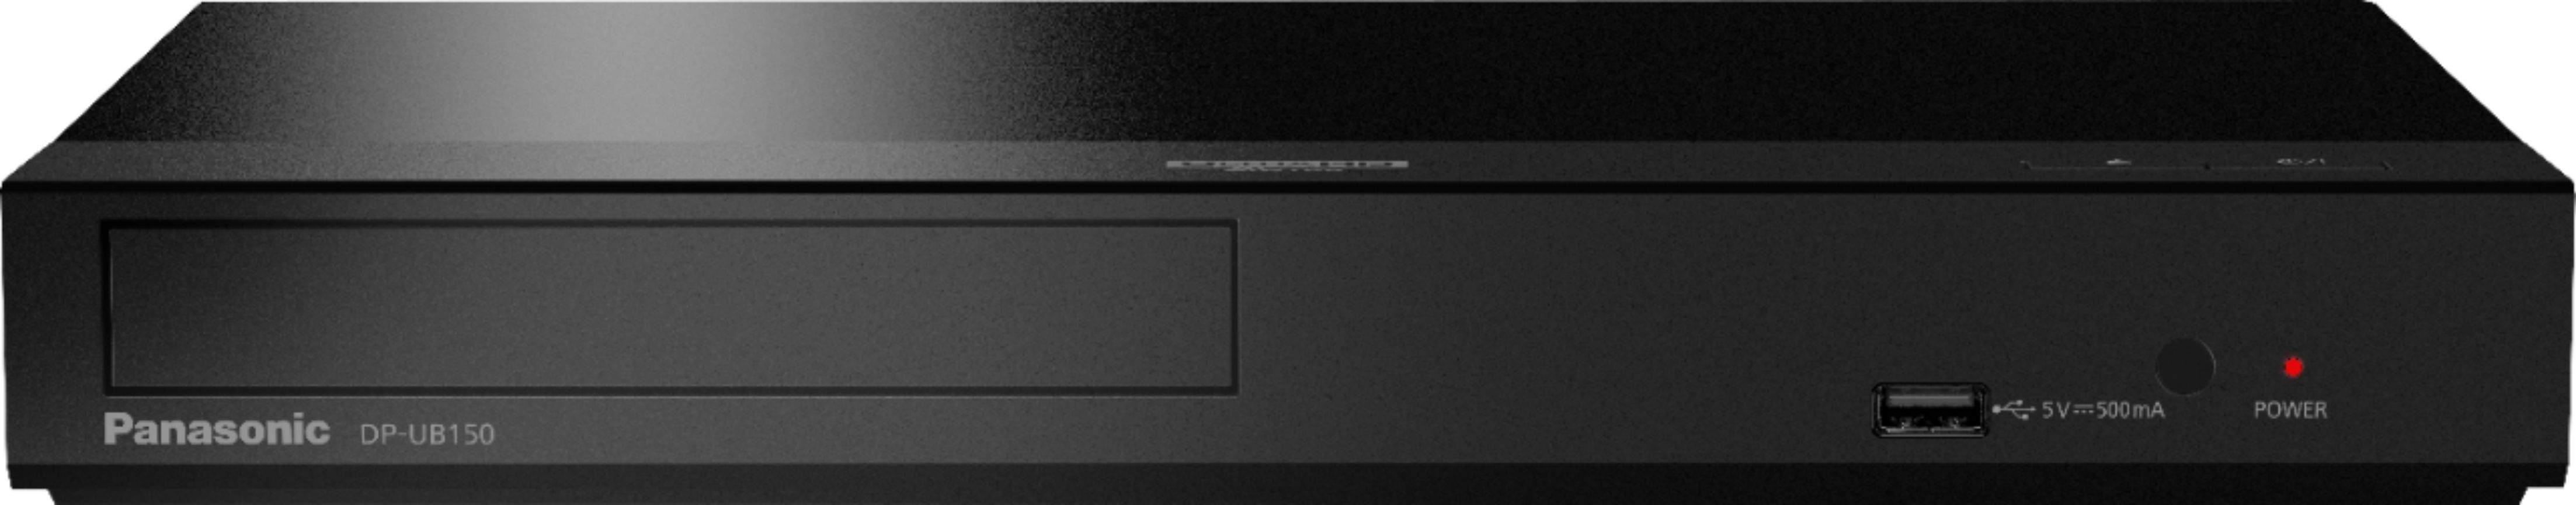 Panasonic 4K Blu Ray Player, Ultra HD Premium Video Playback and Hi-Res Audio - DP-UB150-K $99.99 FS at bestbuy